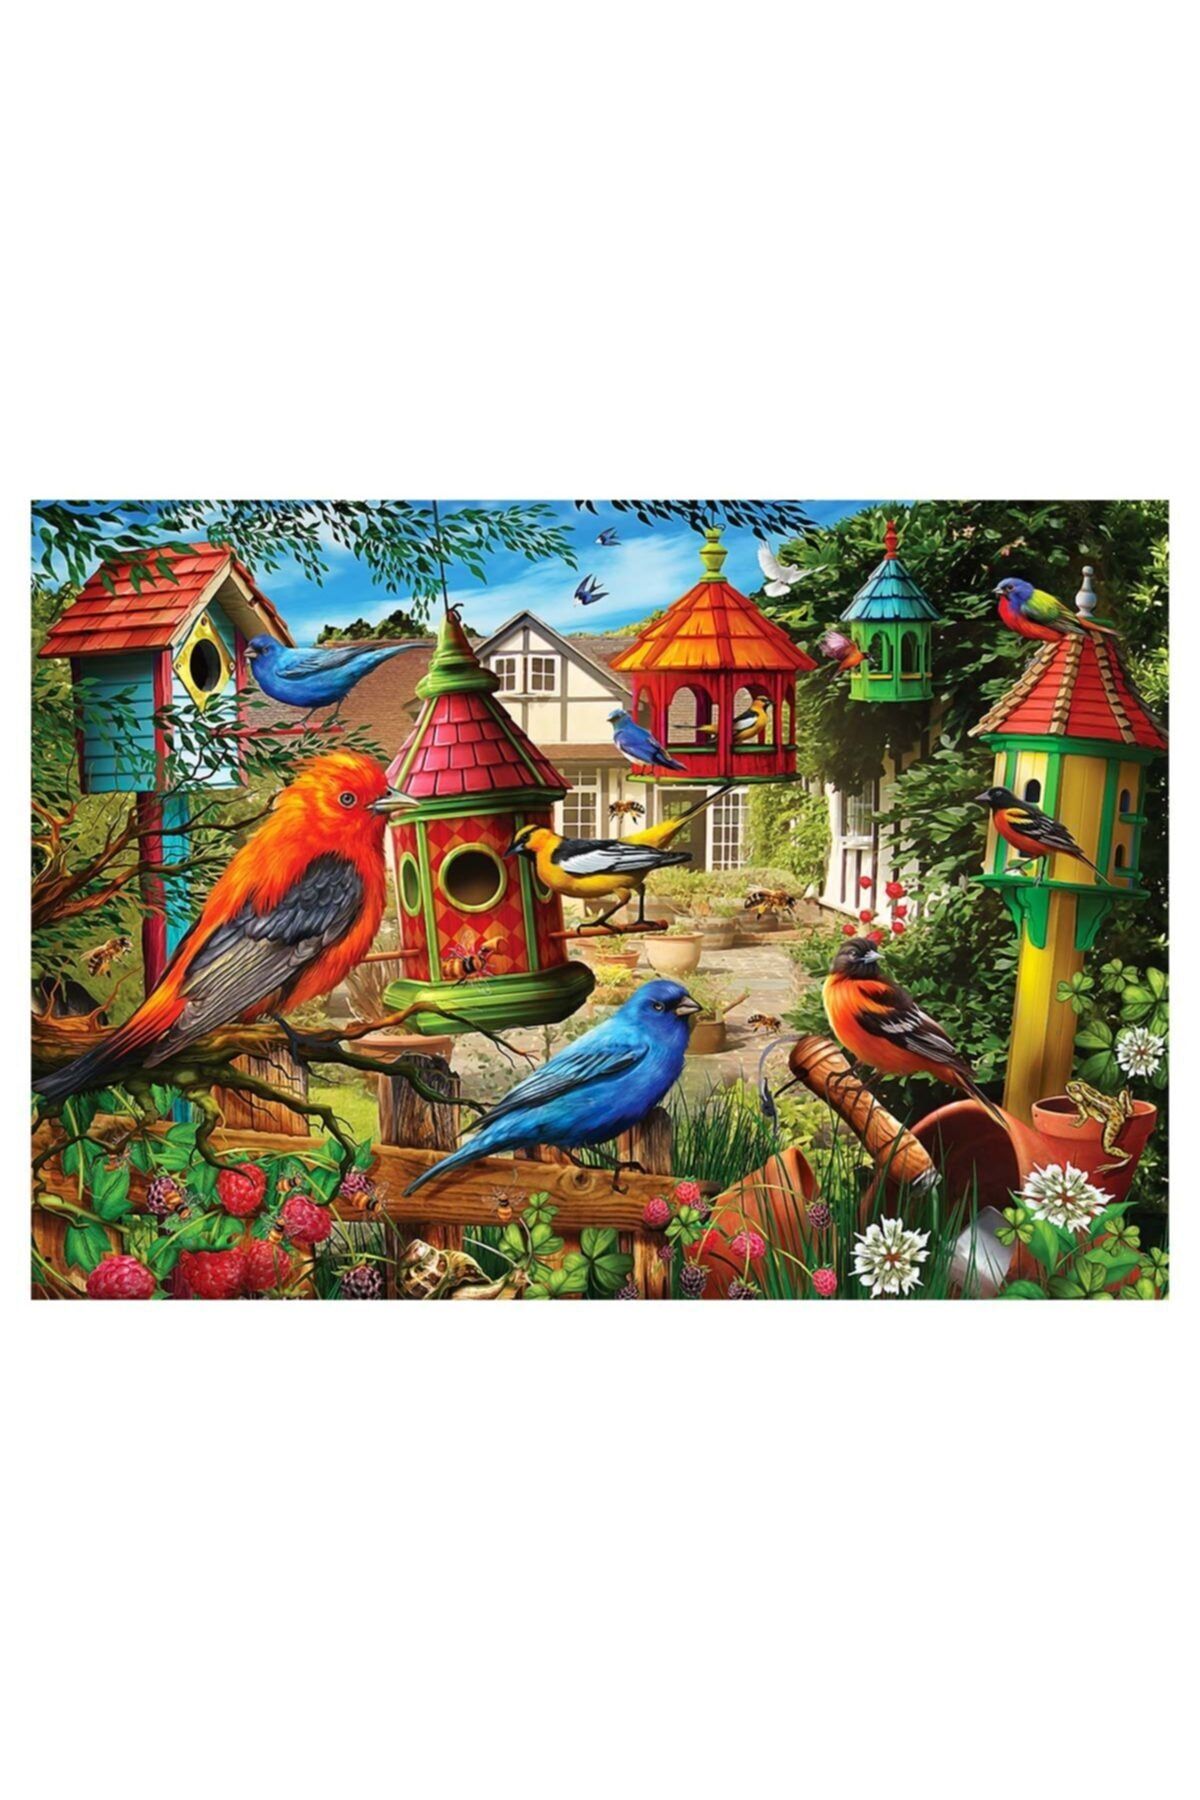 Genel Markalar 23003 Ks, Bird House Gardens, 3000 Parça Puzzle